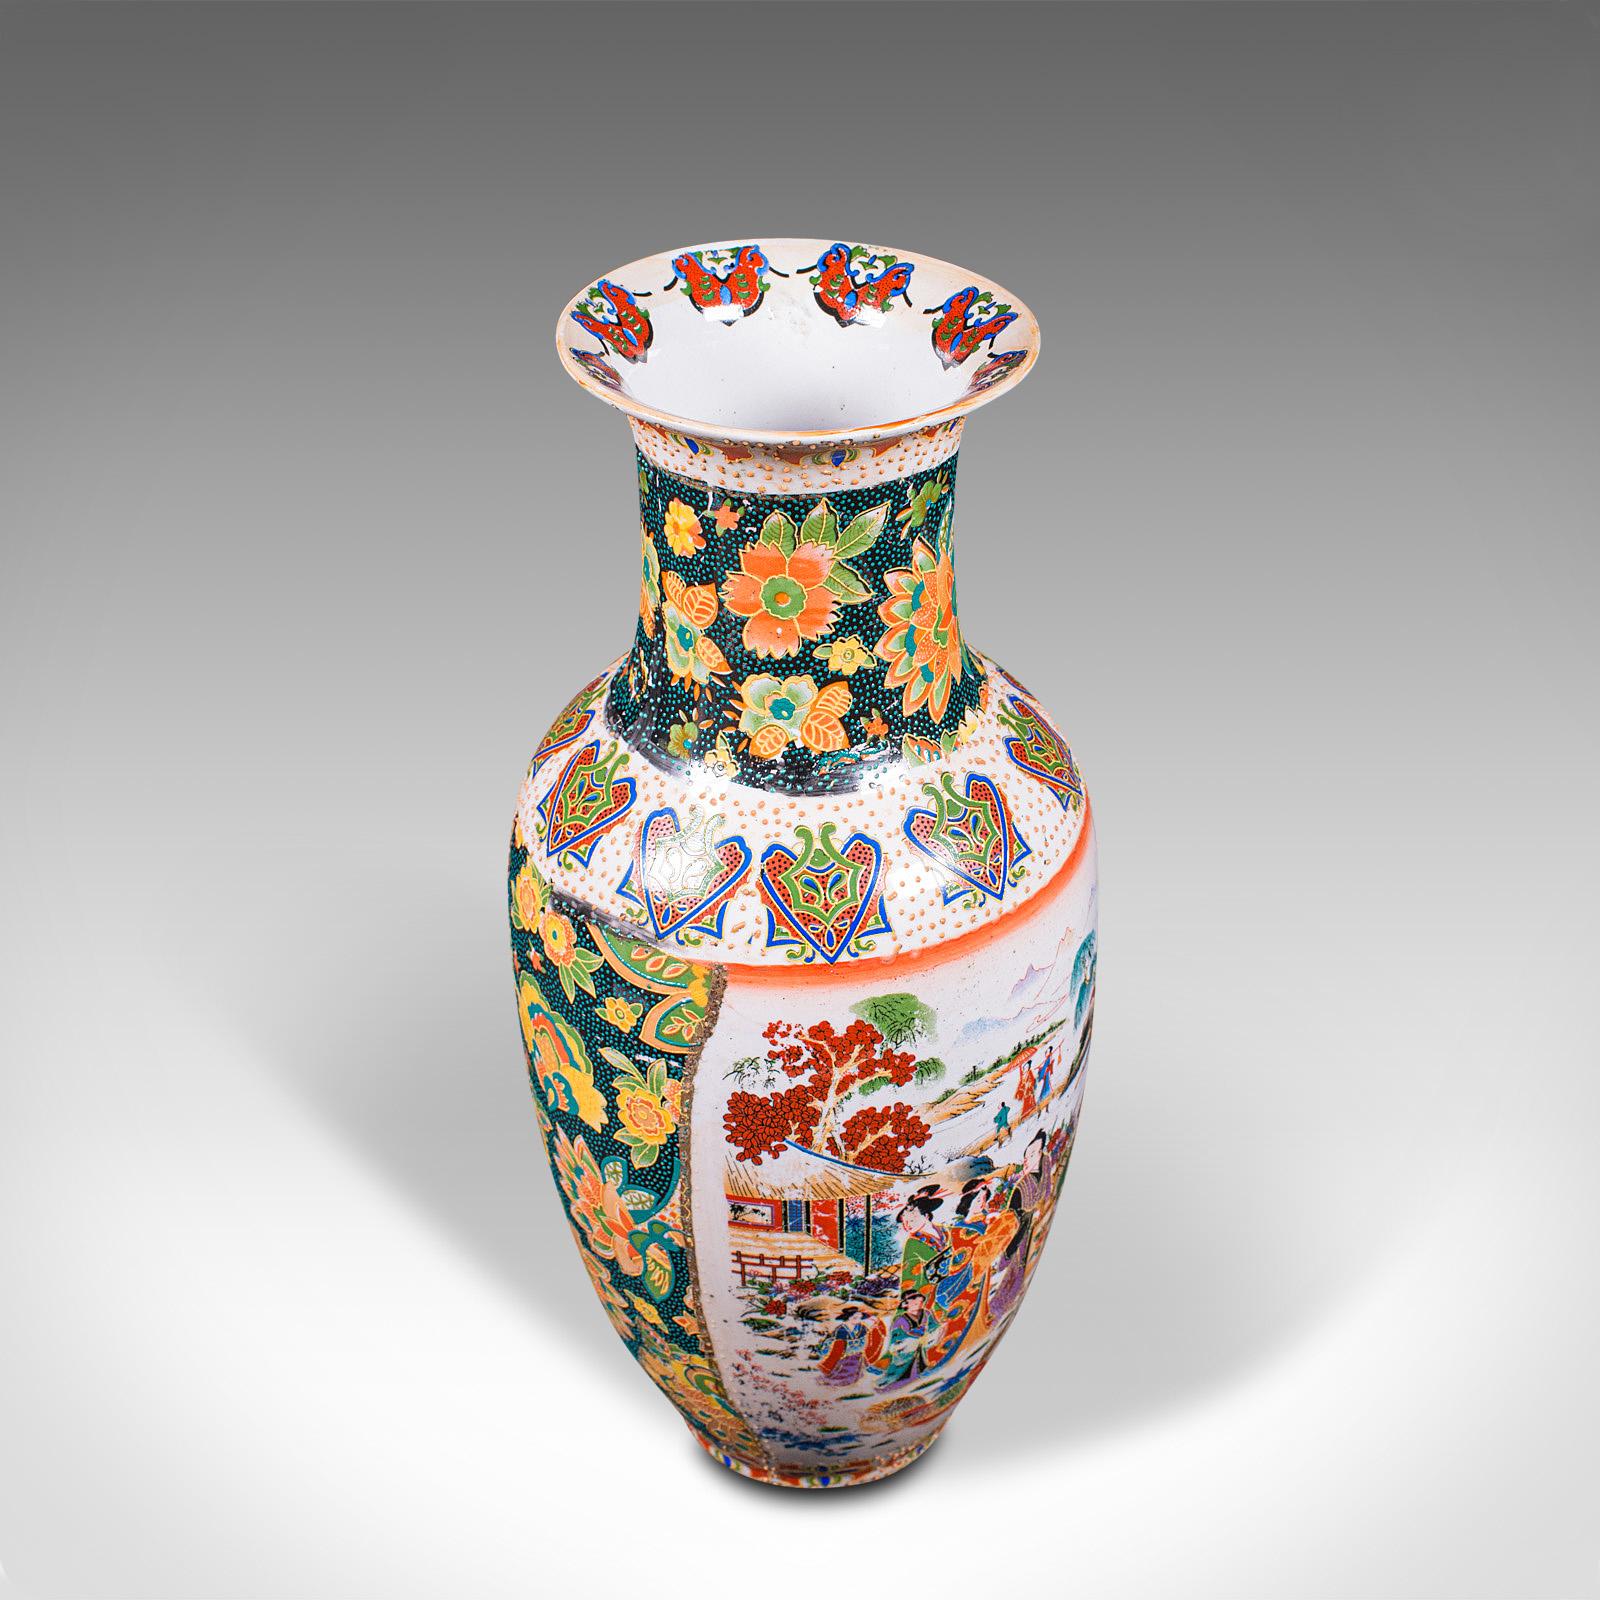 Ceramic Vintage Flower Vase, Chinese, Art Deco, Display, Urn, Mid 20th Century, C.1940